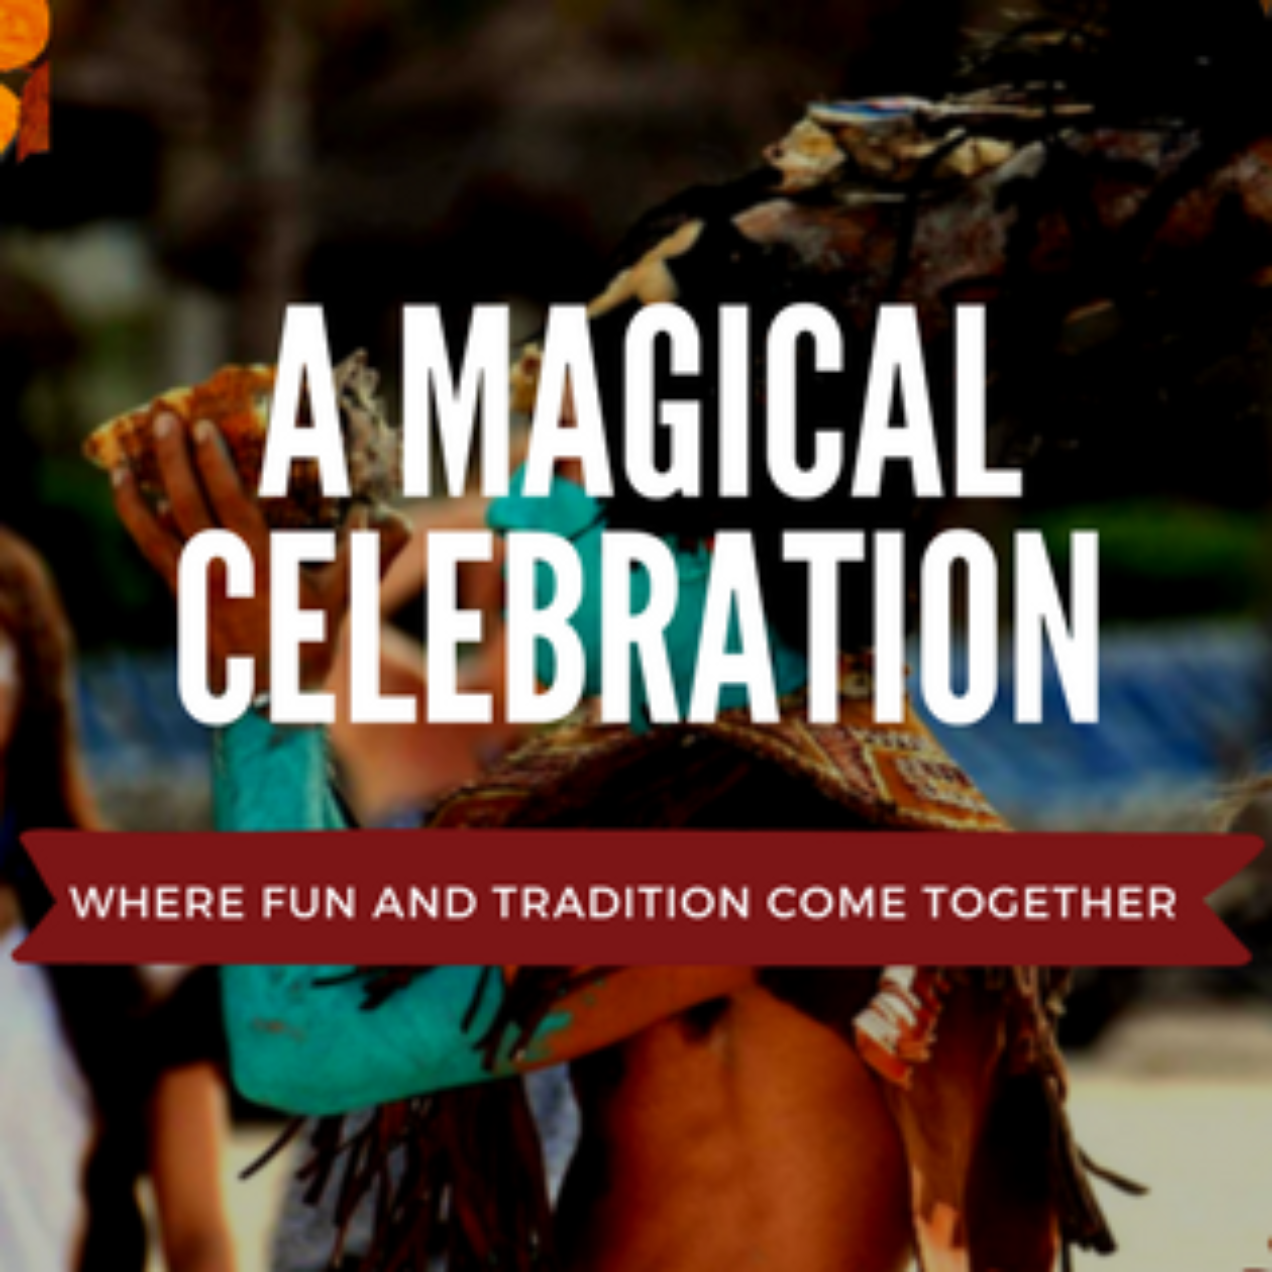 A magical celebration